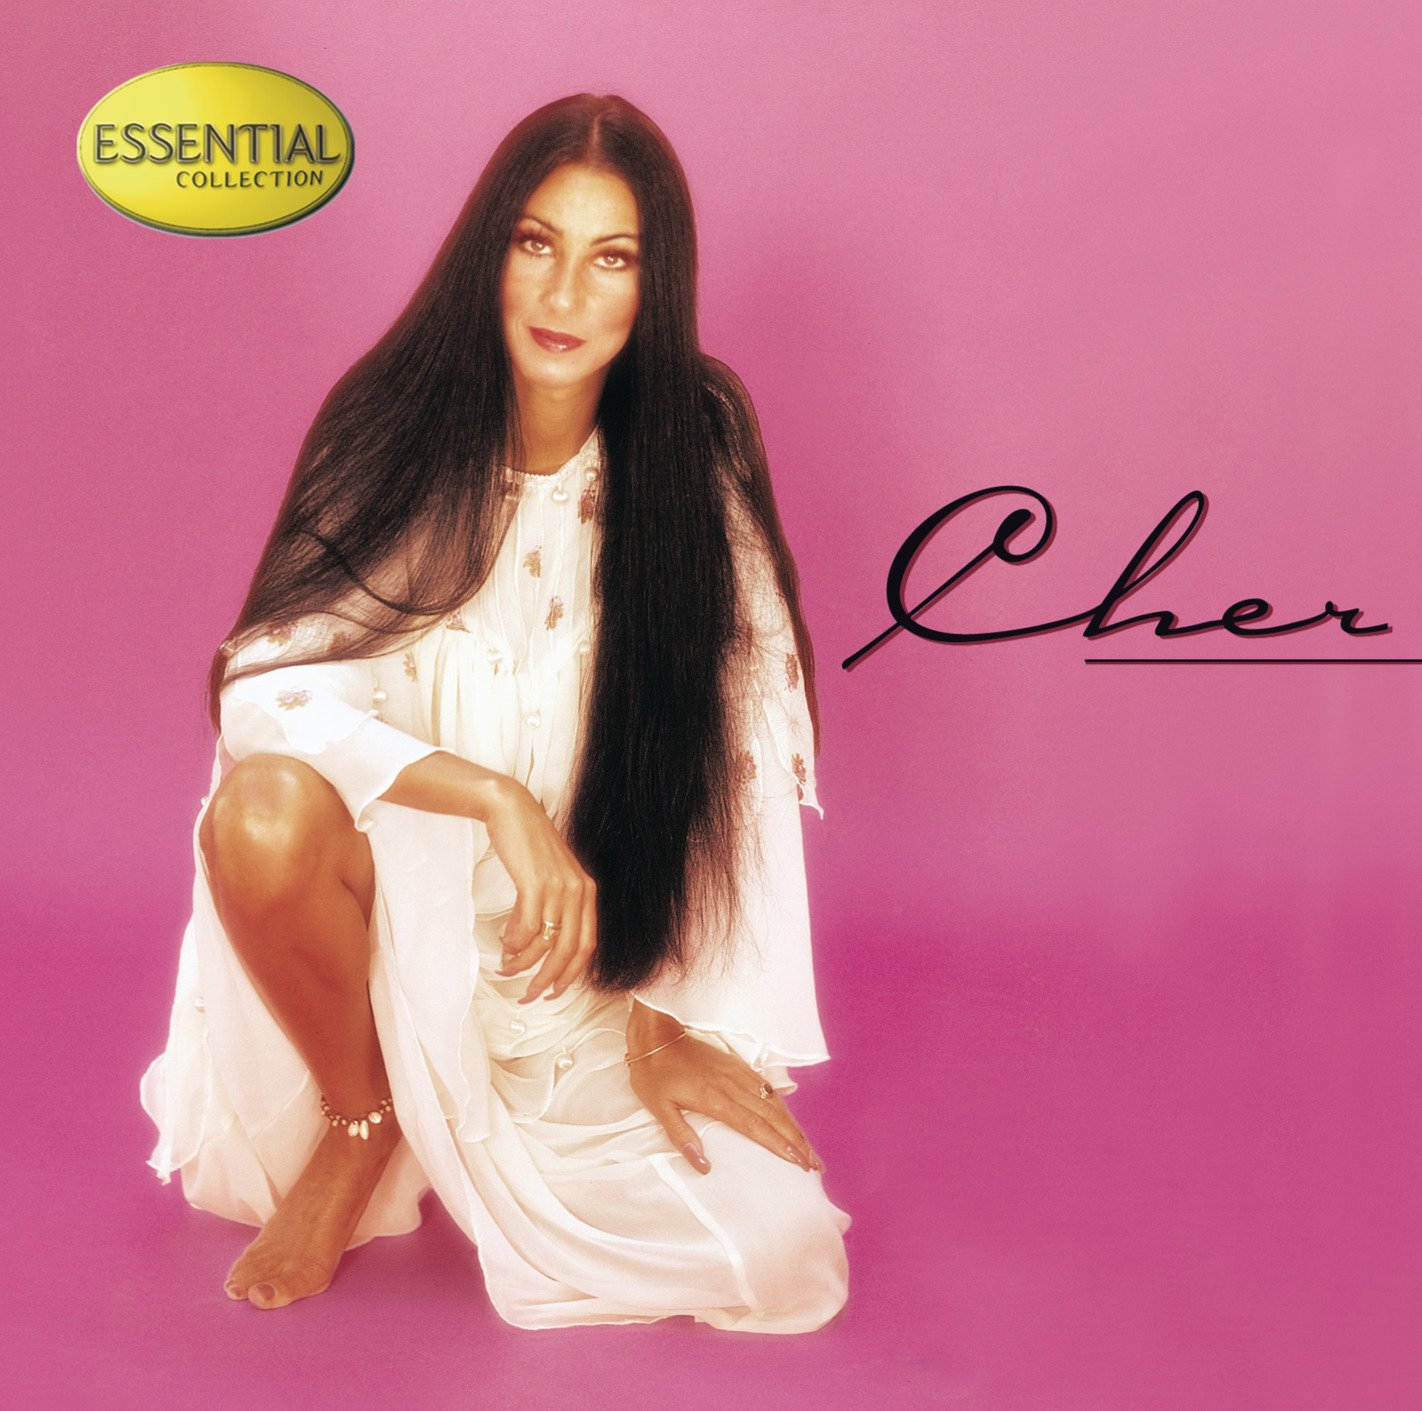 Cher l amore. Шер альбомы. Шер обложки альбомов. Cher - believe обложка альбома. Cher в платье обложка альбома.